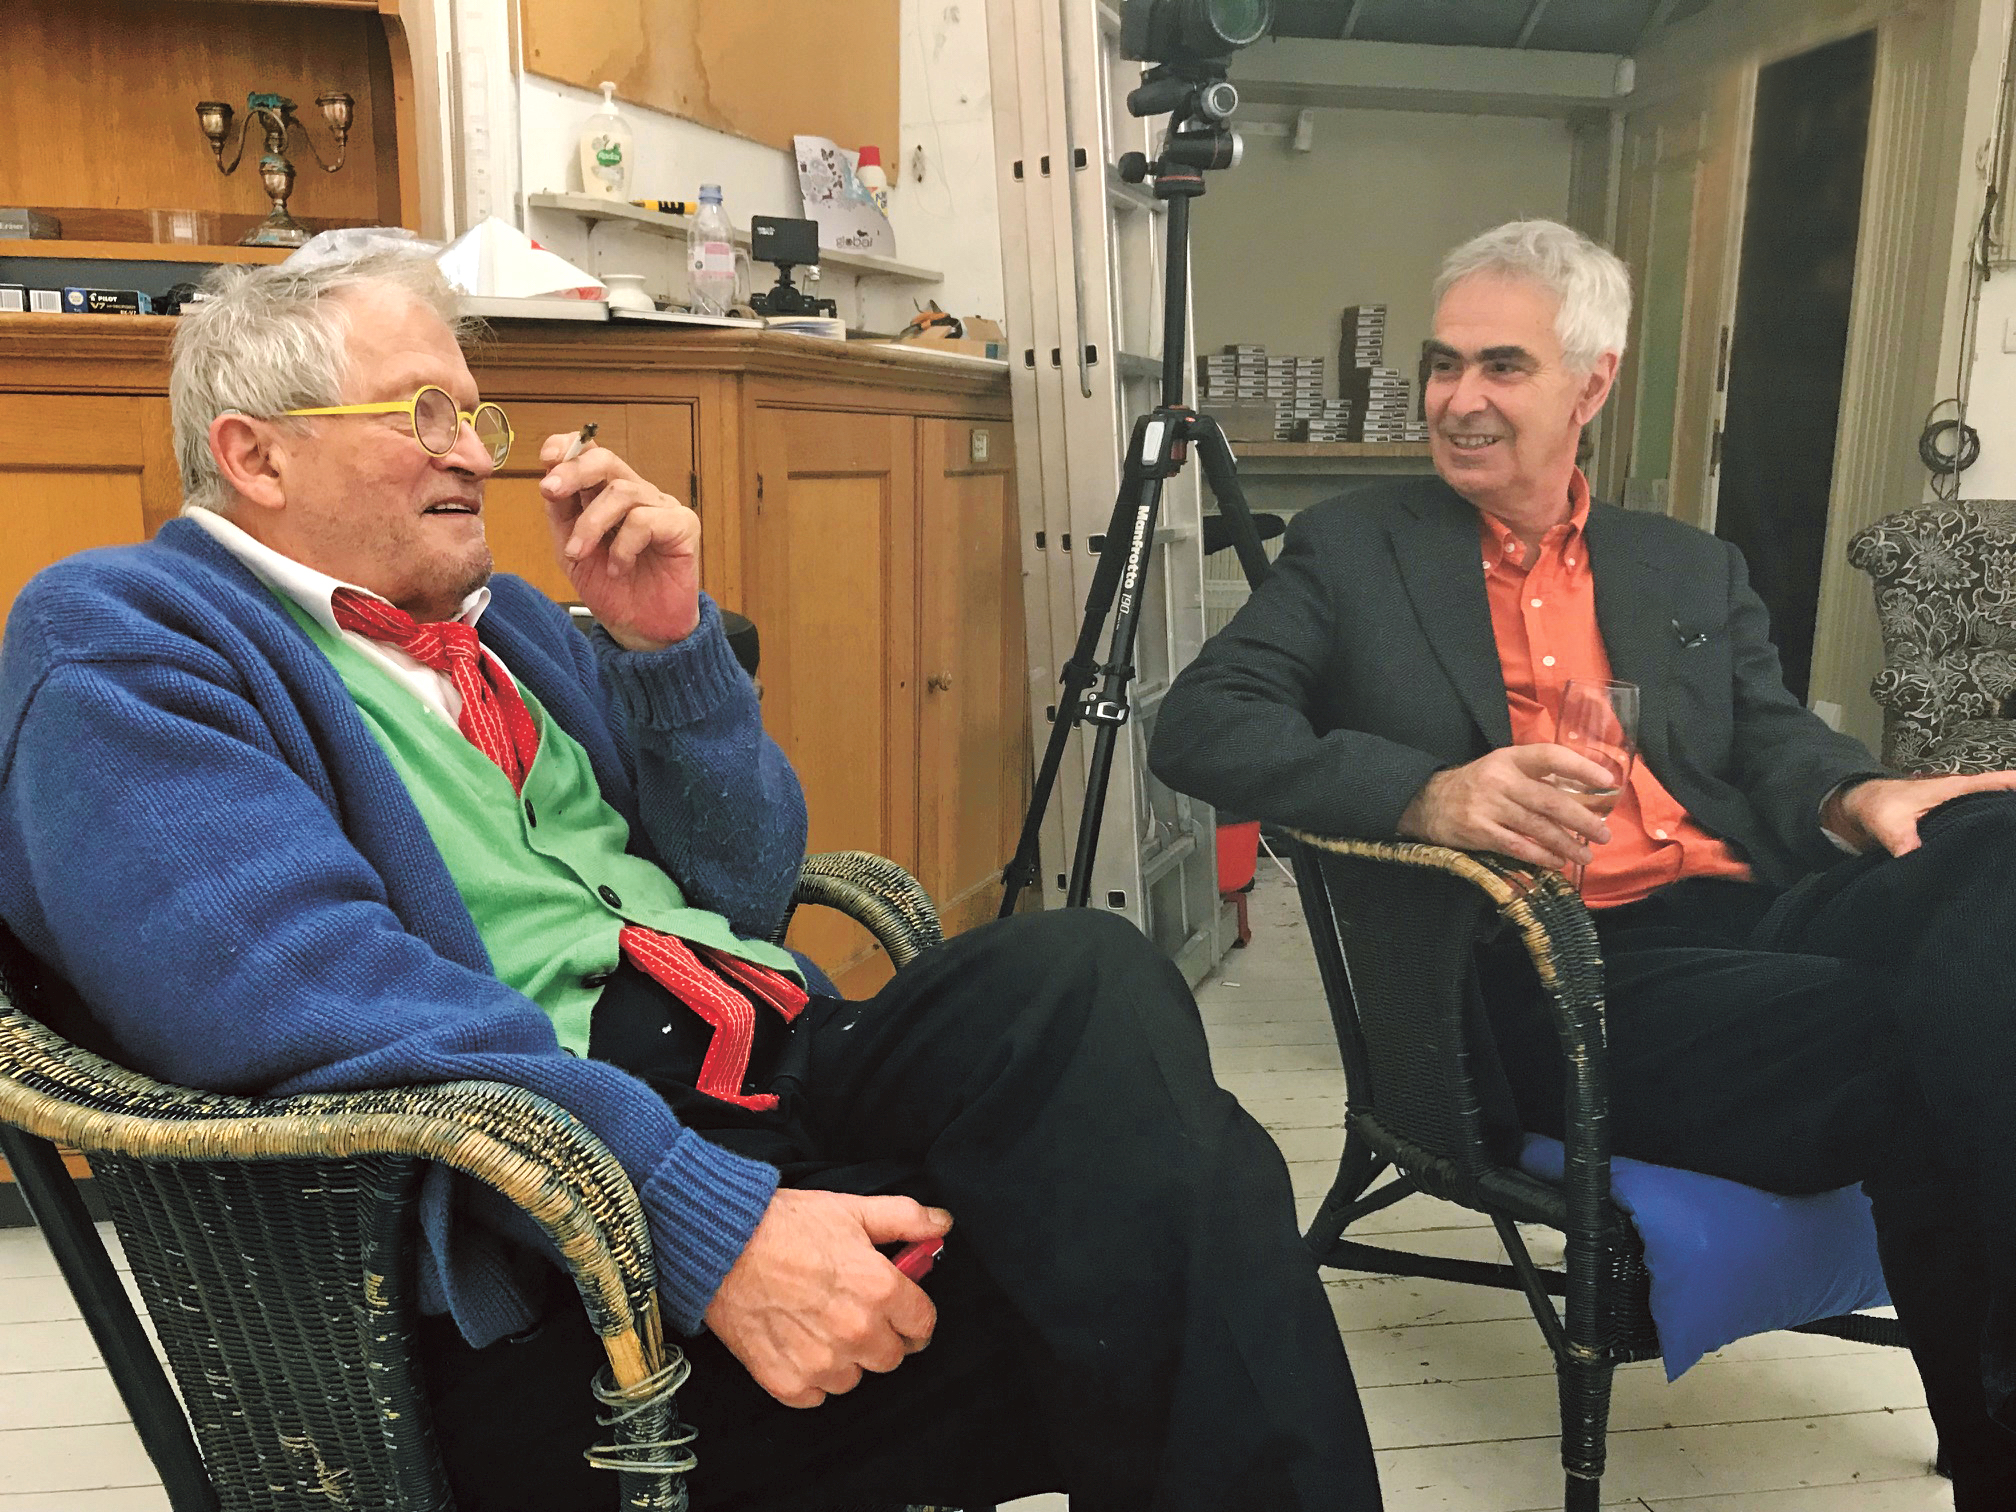 David Hockney and Martin Gayford in conversation. Photo: David Dawson. Image courtesy of Thames & Hudson